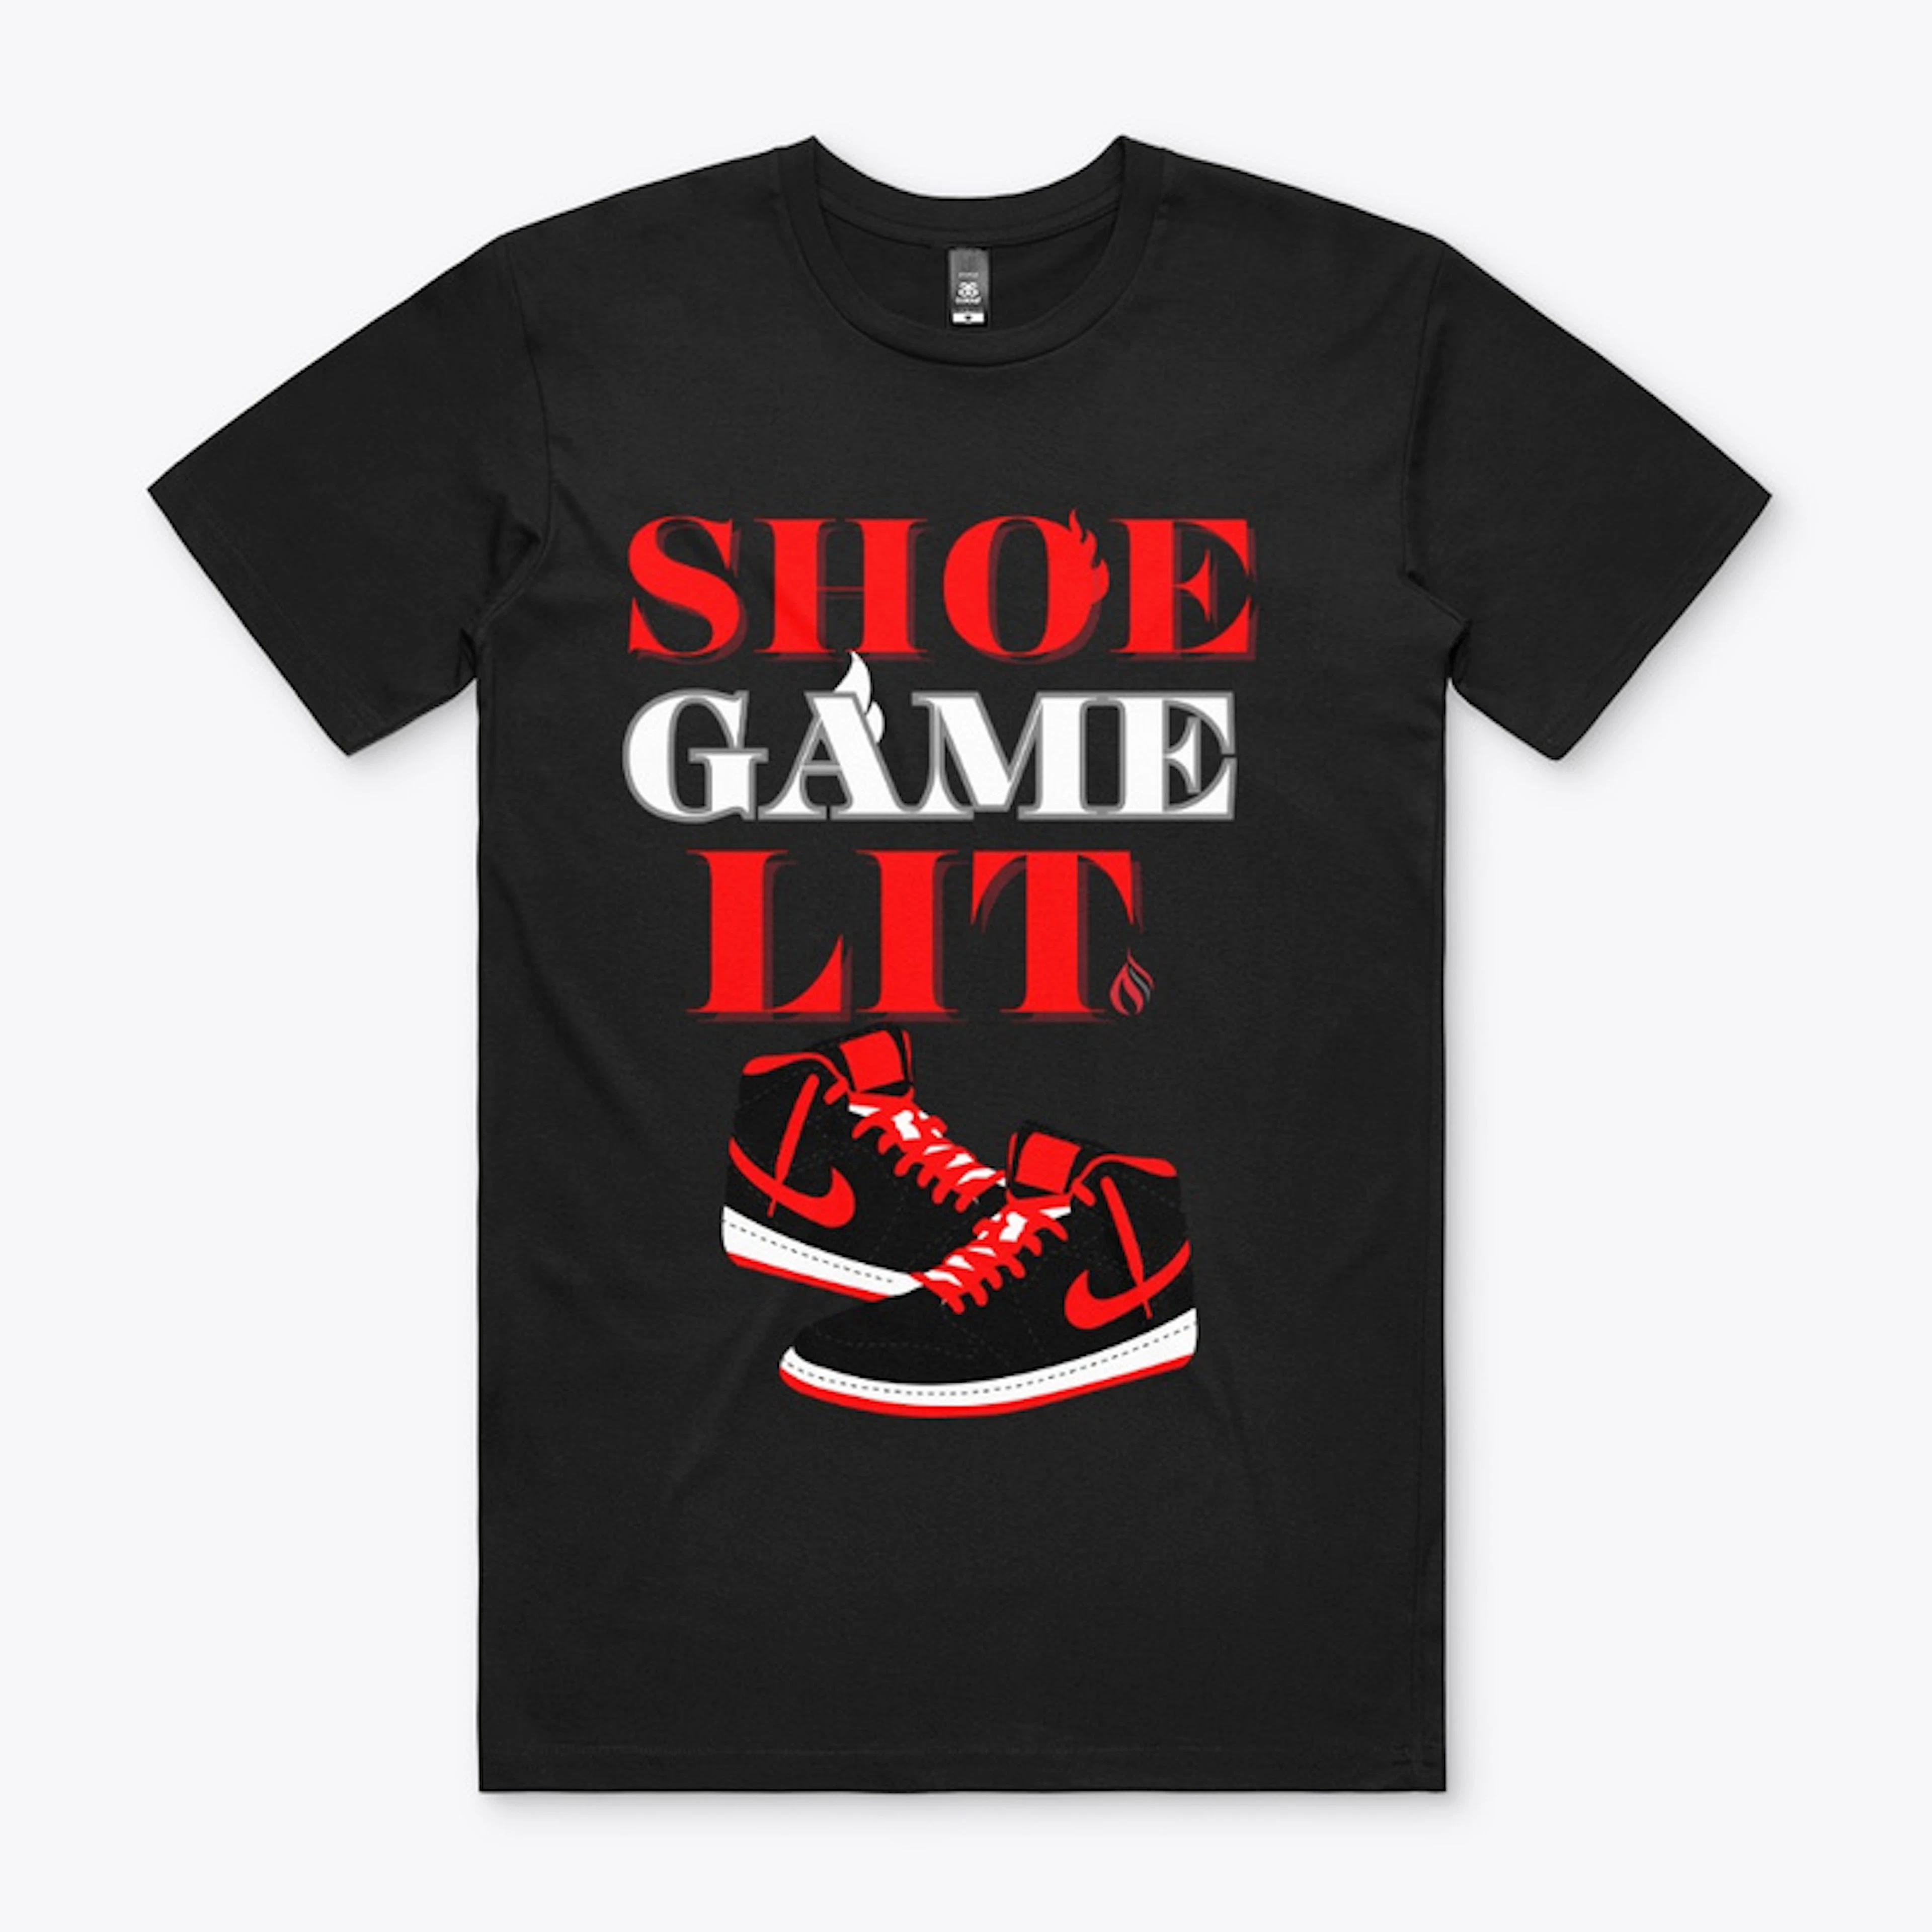 Shoe Game